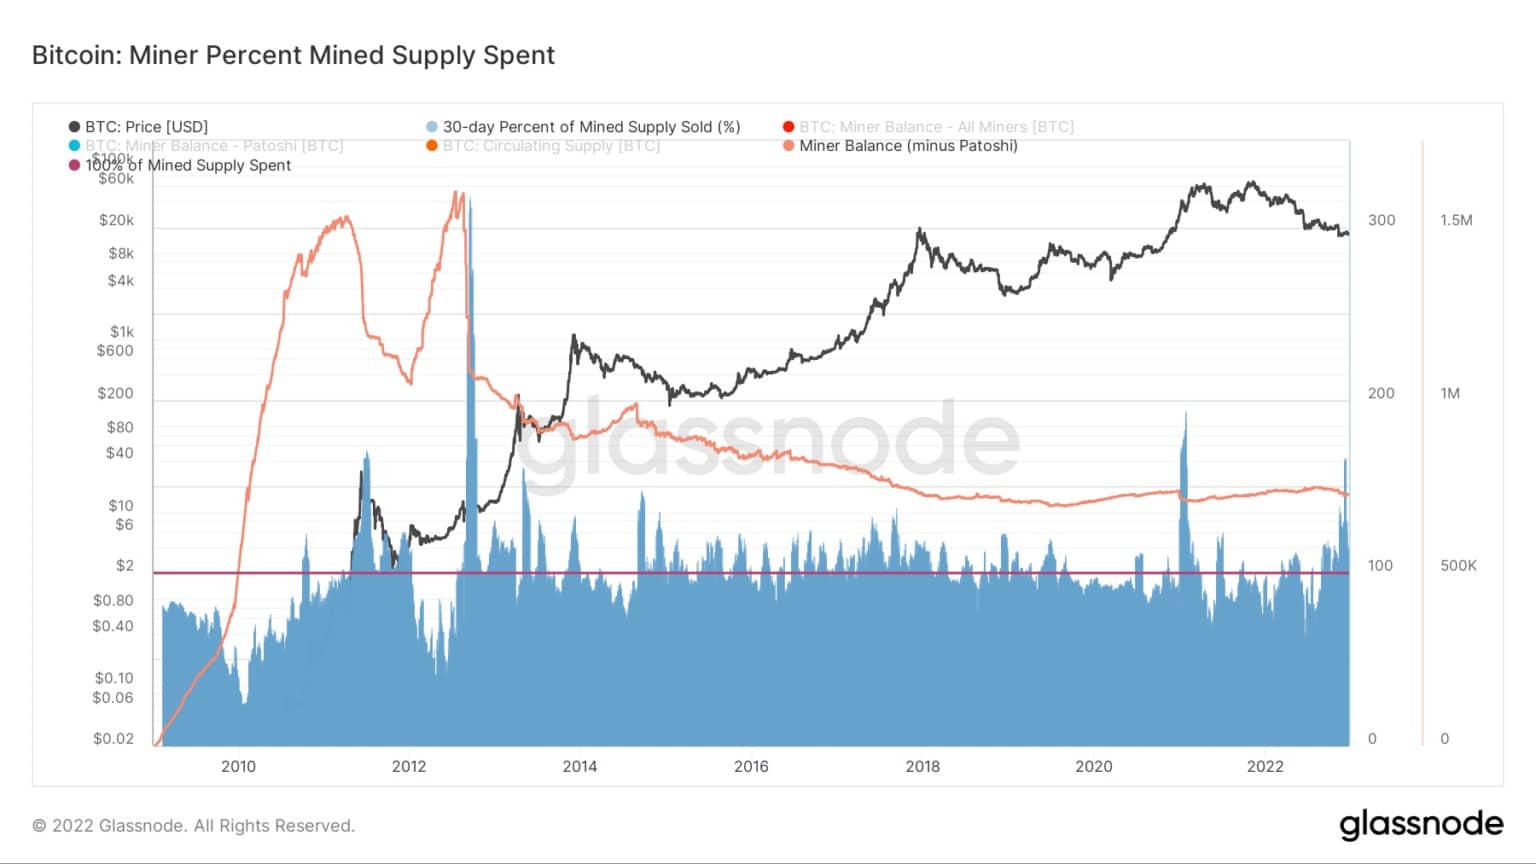 Bitcoin: Miner Percent Minted Supply Spent / Fuente: Glassnode